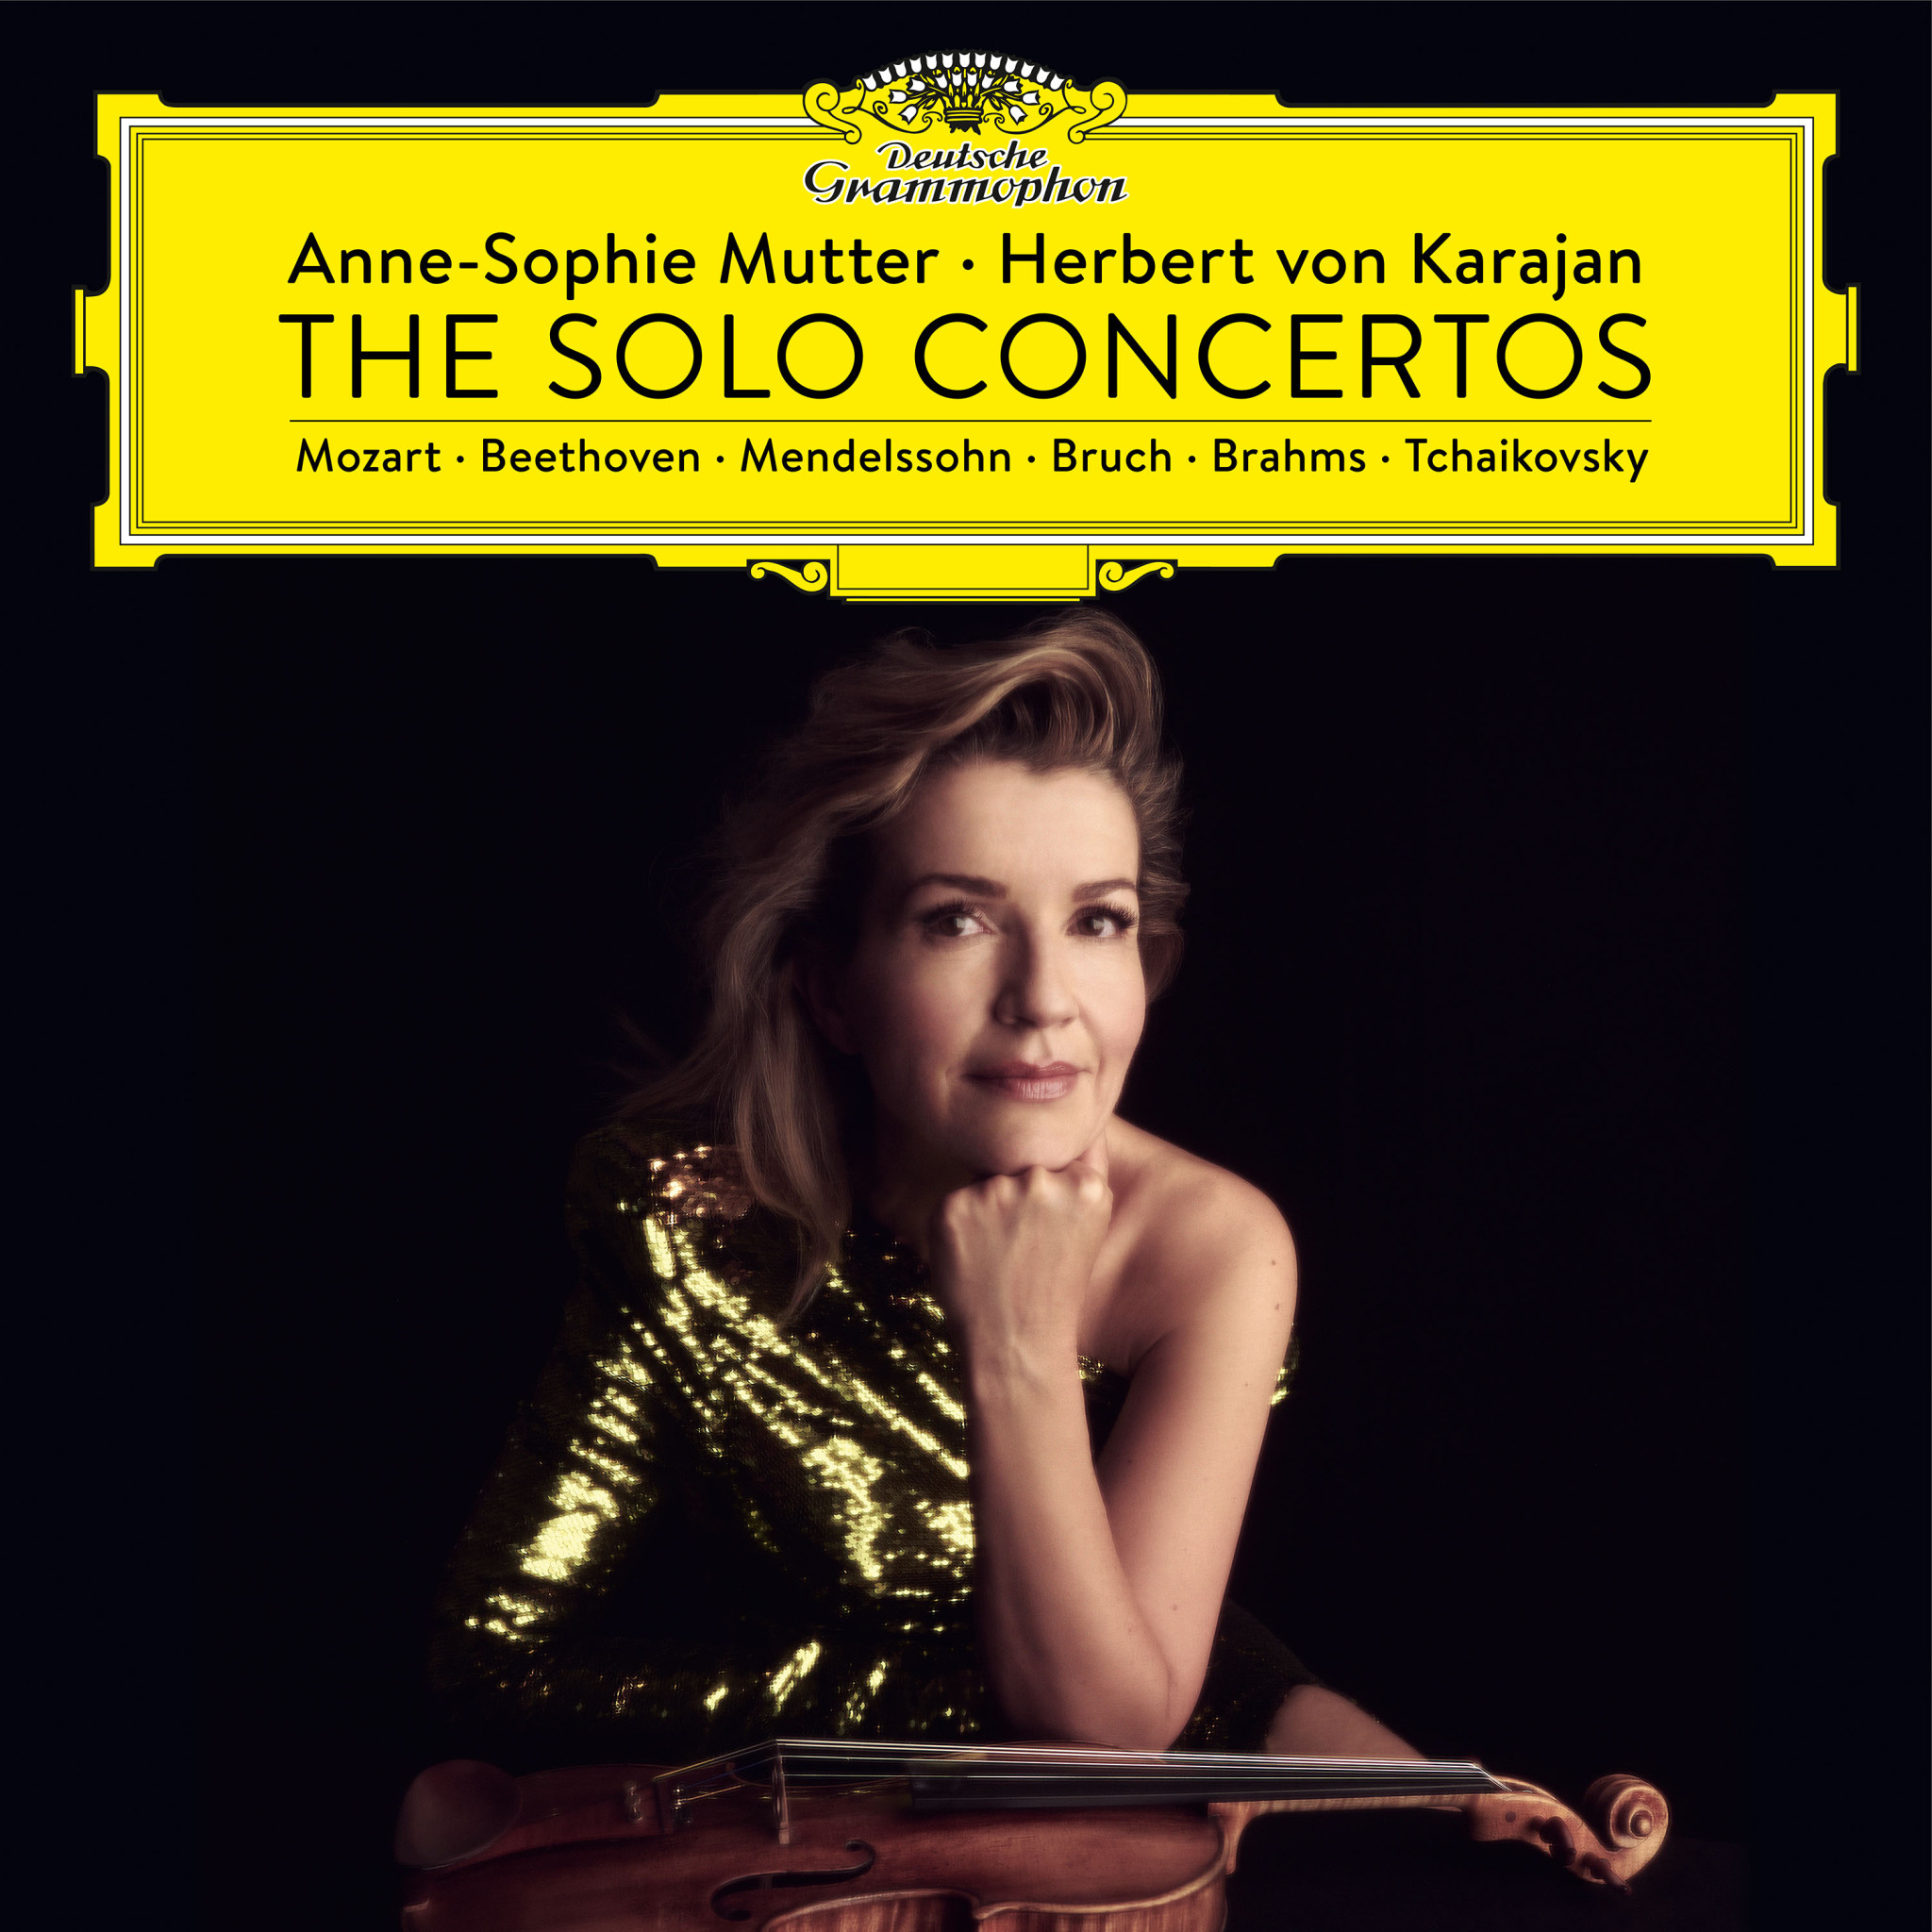 Mutter, Karajan - The Solo Concertos